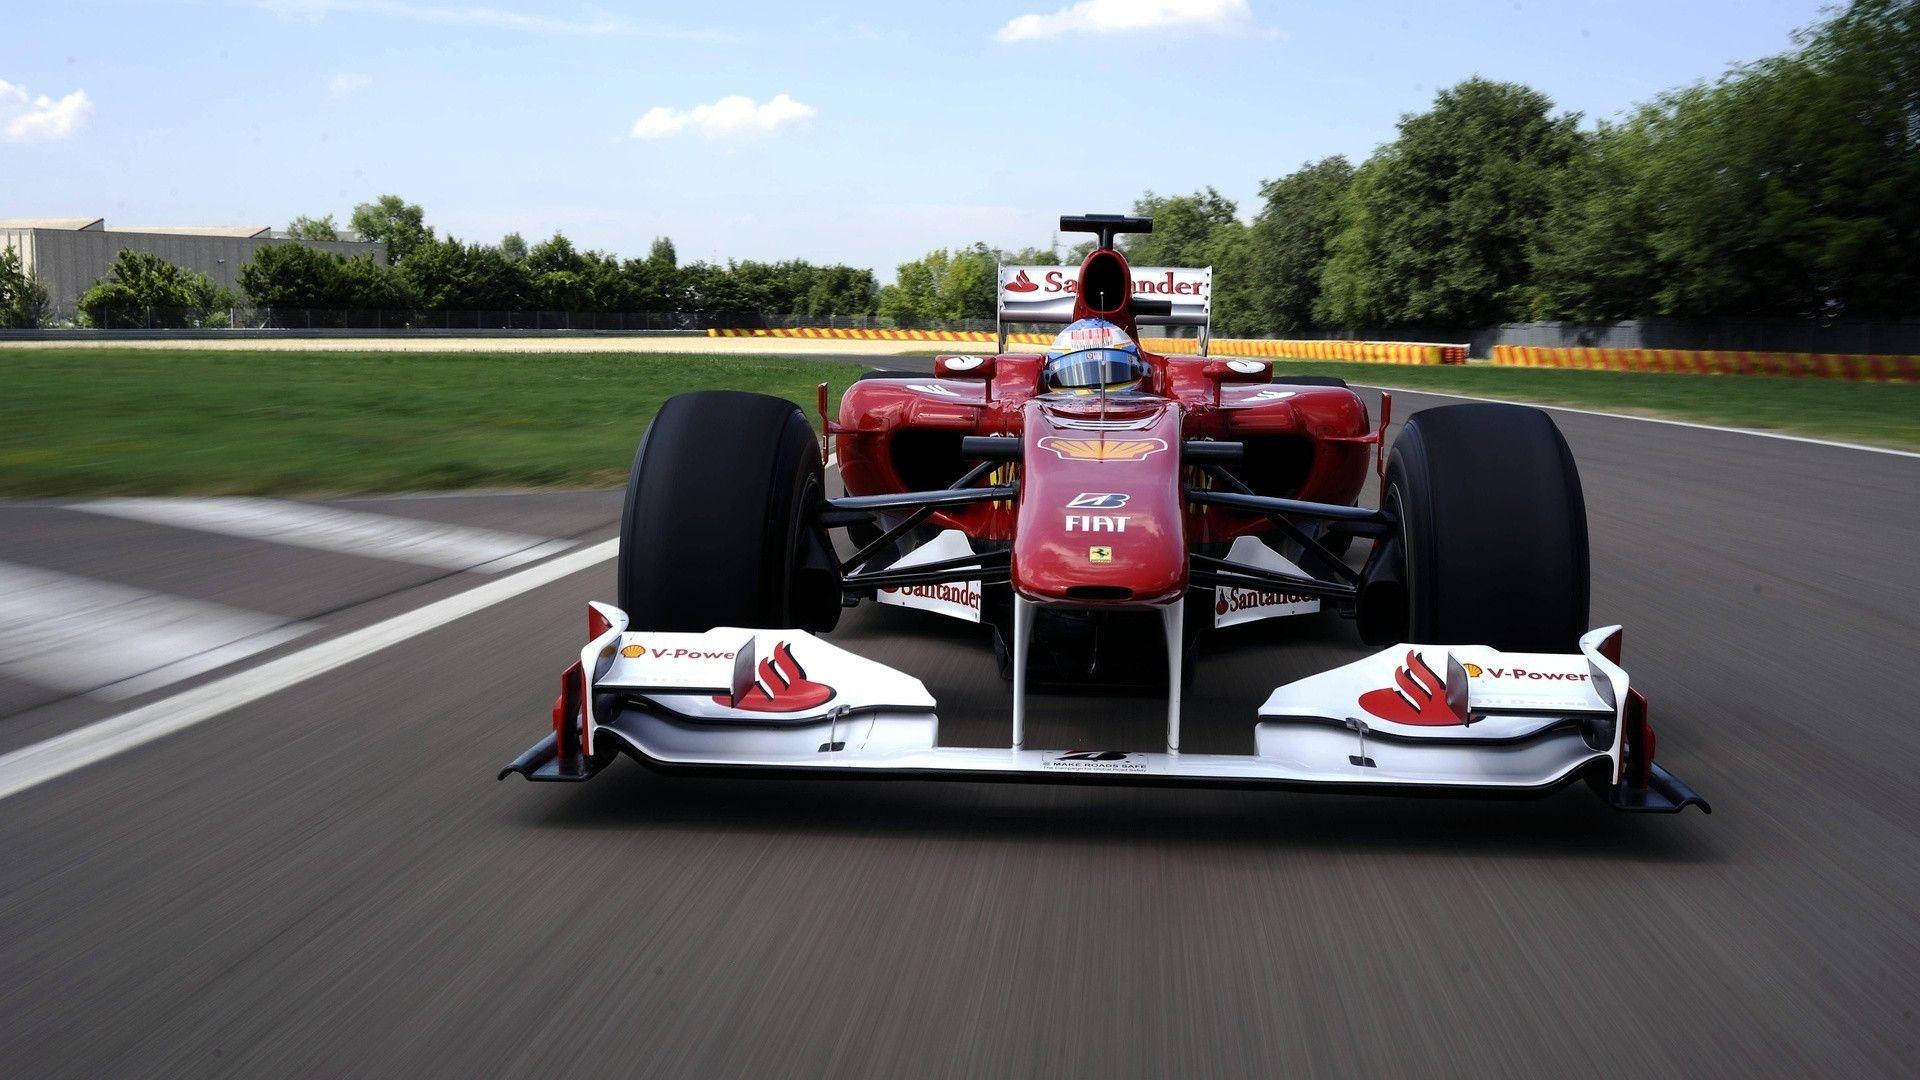 Download wallpaper Fernando Alonso, Ferrari, rate, track free